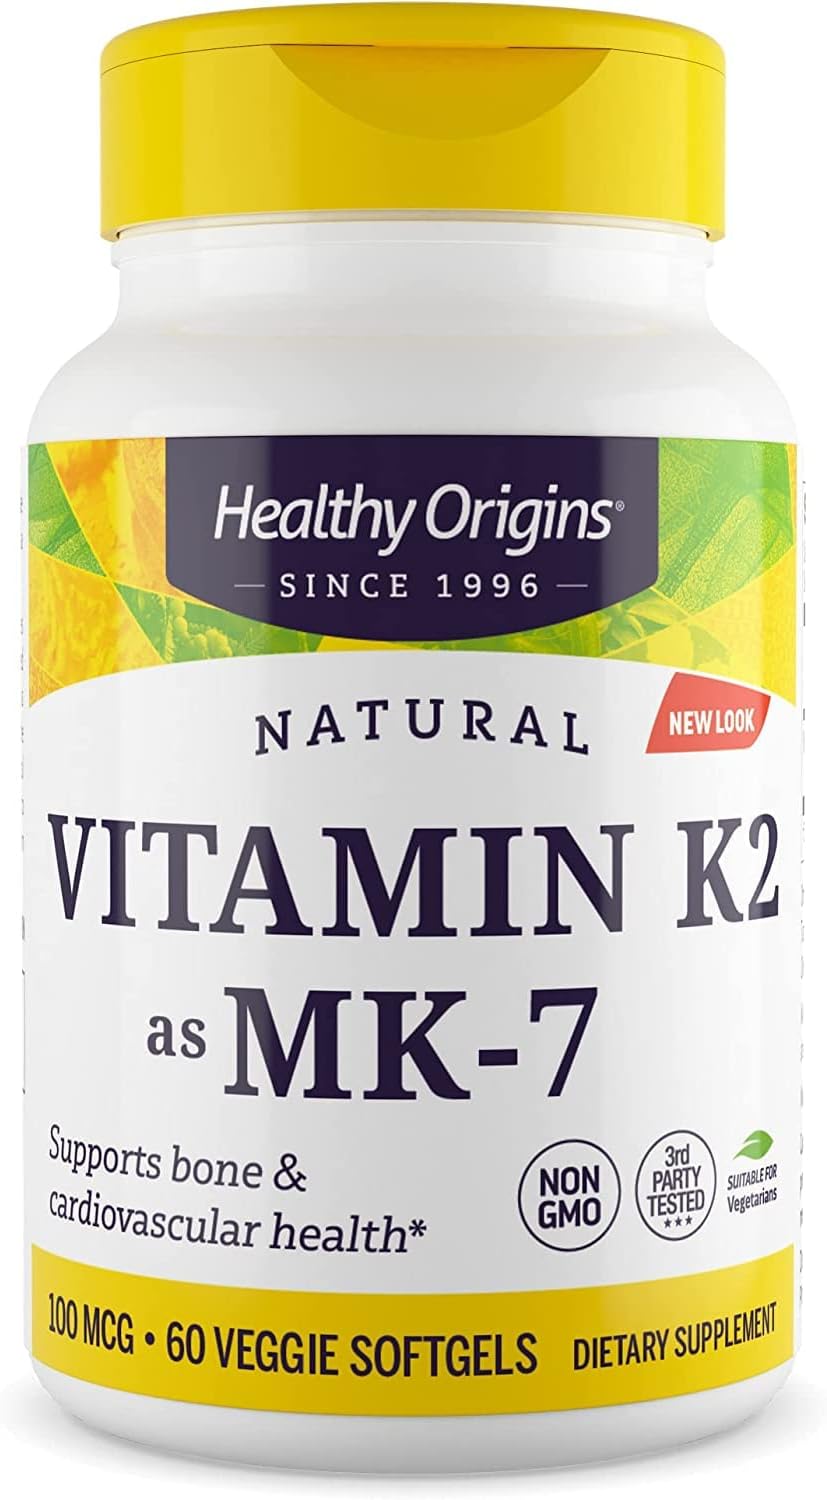 Healthy Origins Vitamin K2 as MK-7, 100 mcg - K2 Vitamins for Heart Health, Bone Health  Calcium Metabolism - Gluten-Free Supplements - 60 Veggie Softgels